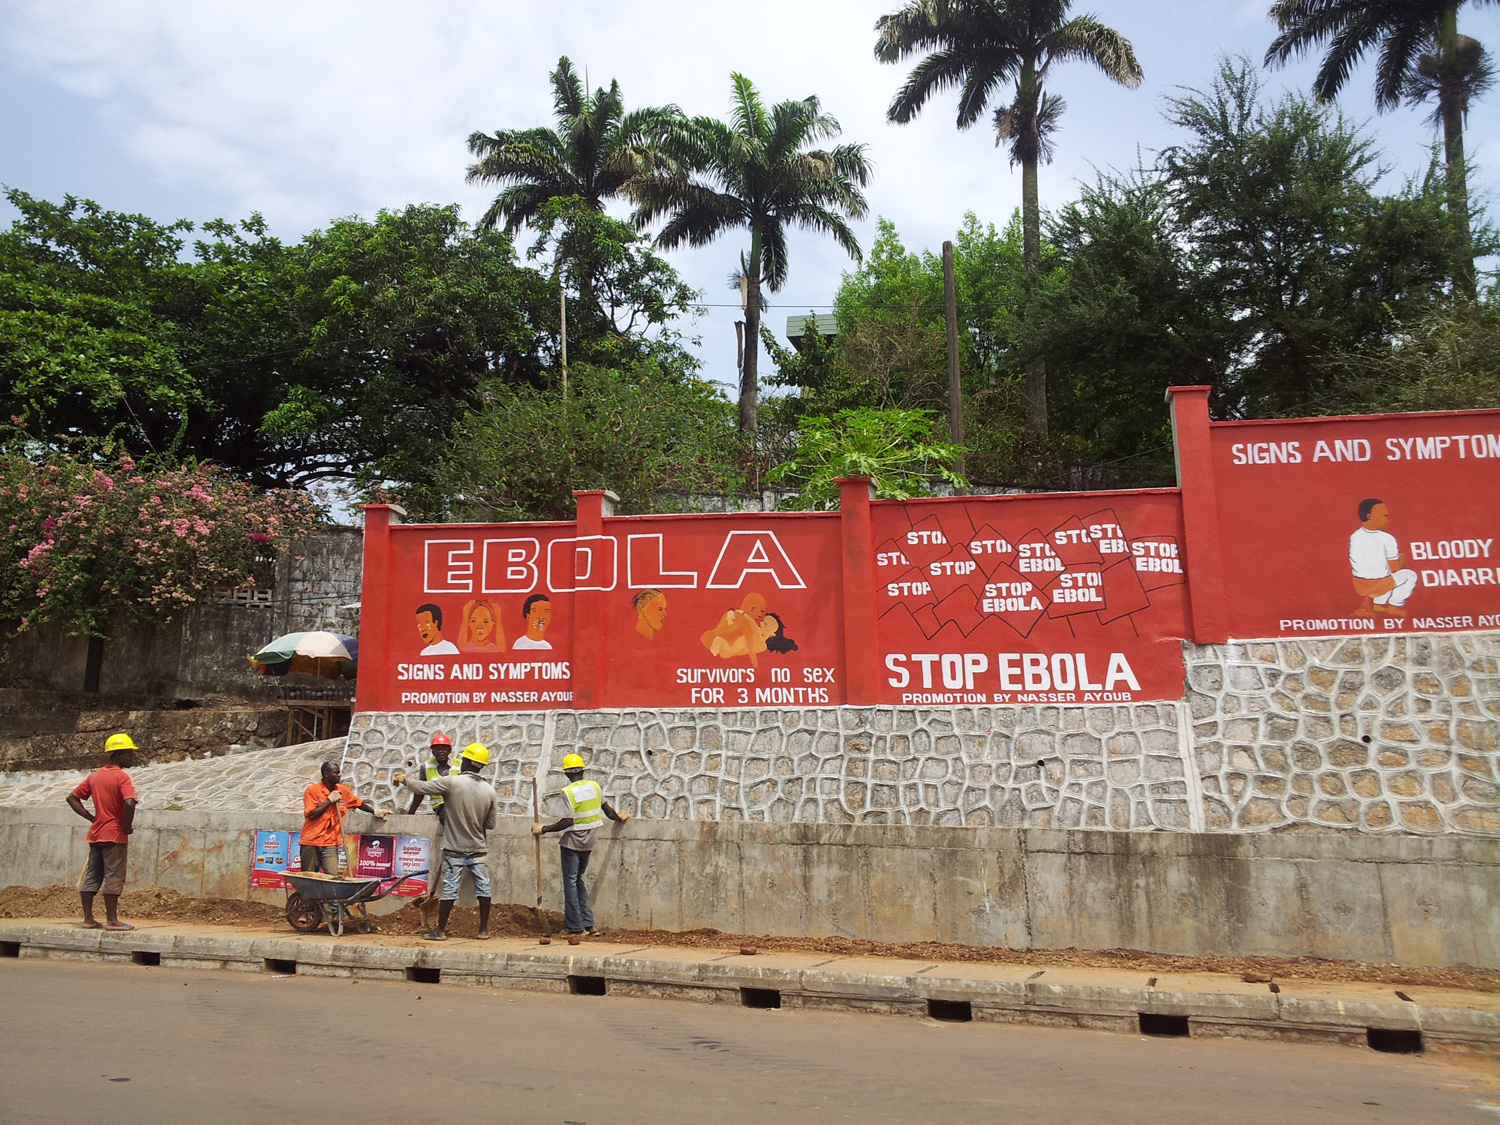 Ebola sign in Sierra Leone